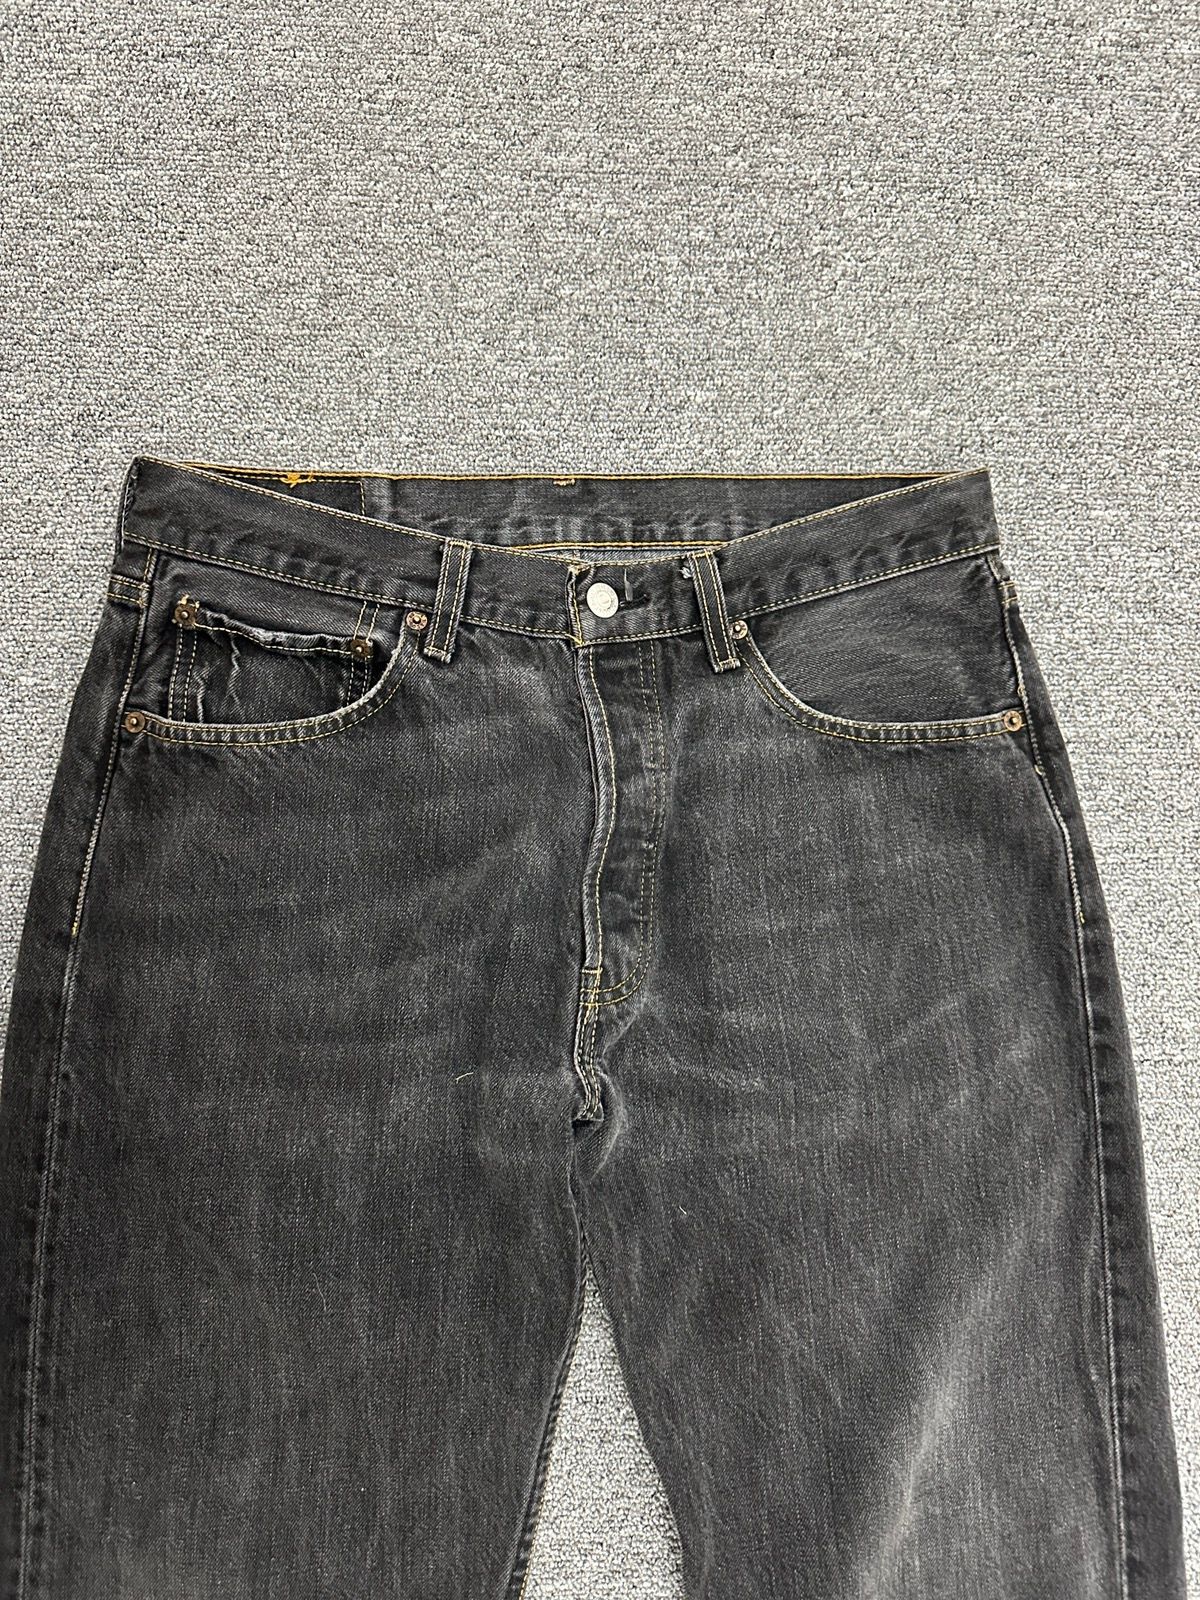 Vintage Vintage 501 Levi’s Faded Black Denim Pants Size US 32 / EU 48 - 8 Thumbnail